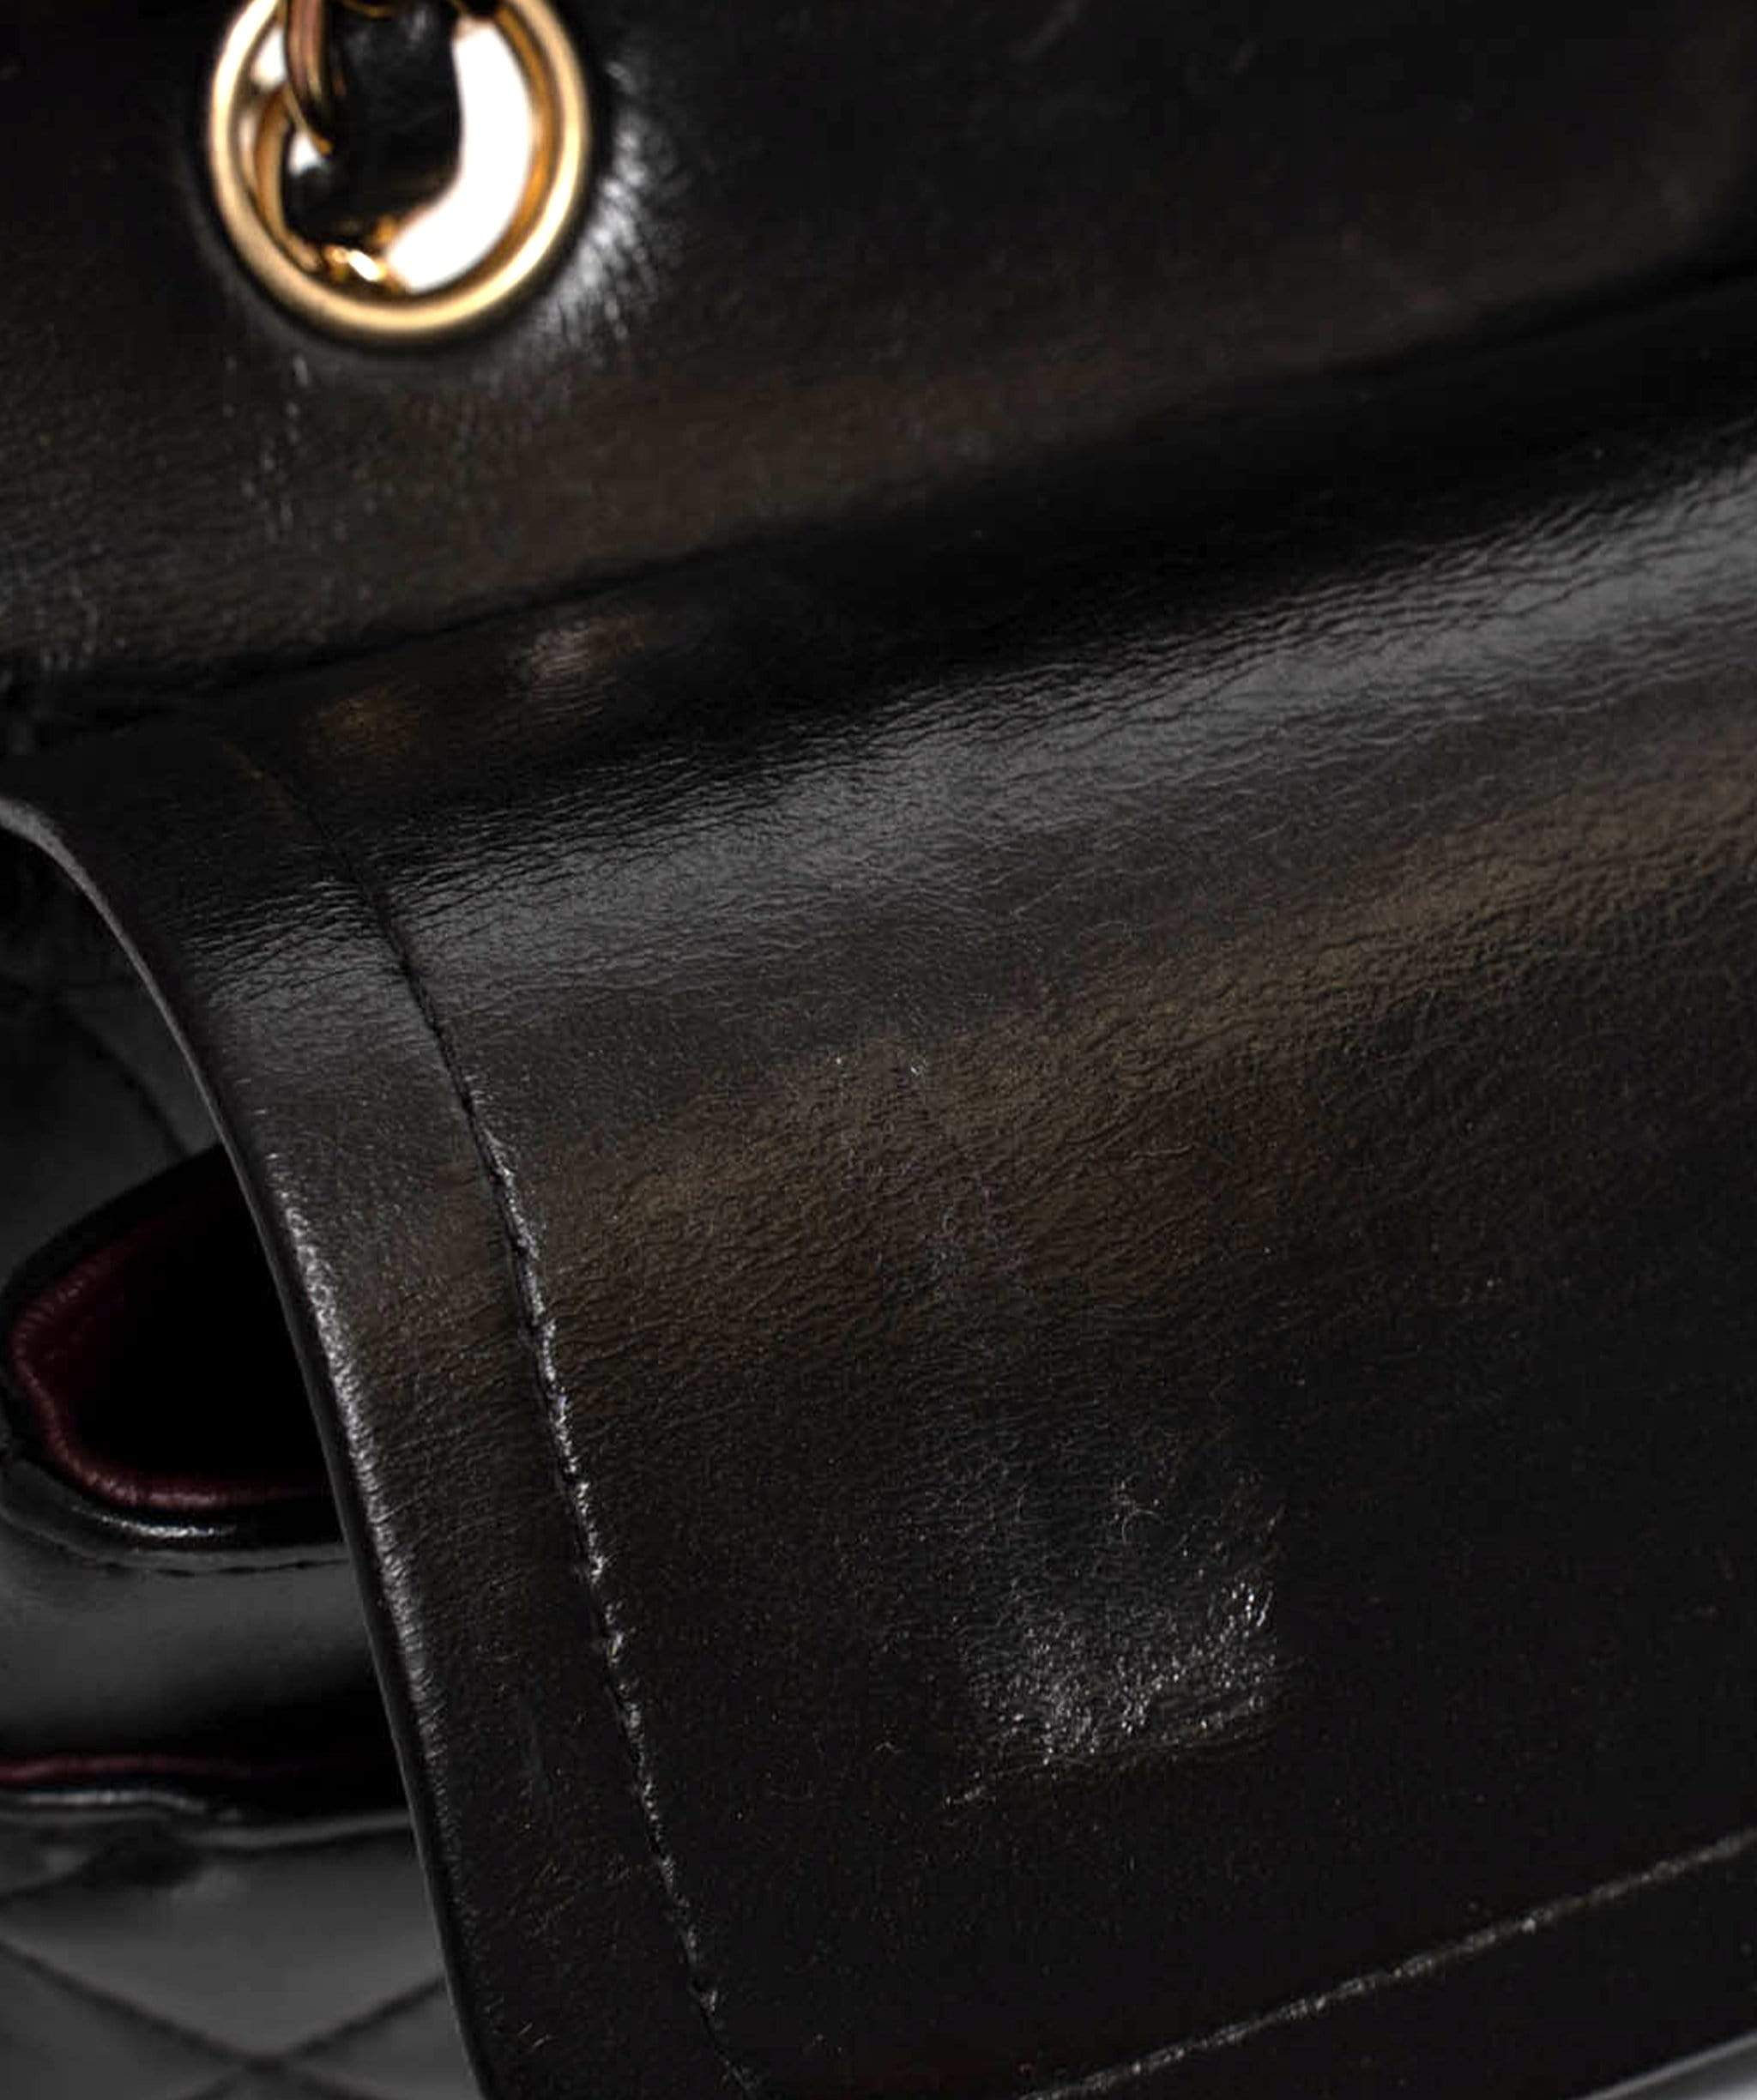 Chanel Chanel Lambskin Medium Double Flap Classic Bag - ADL1557